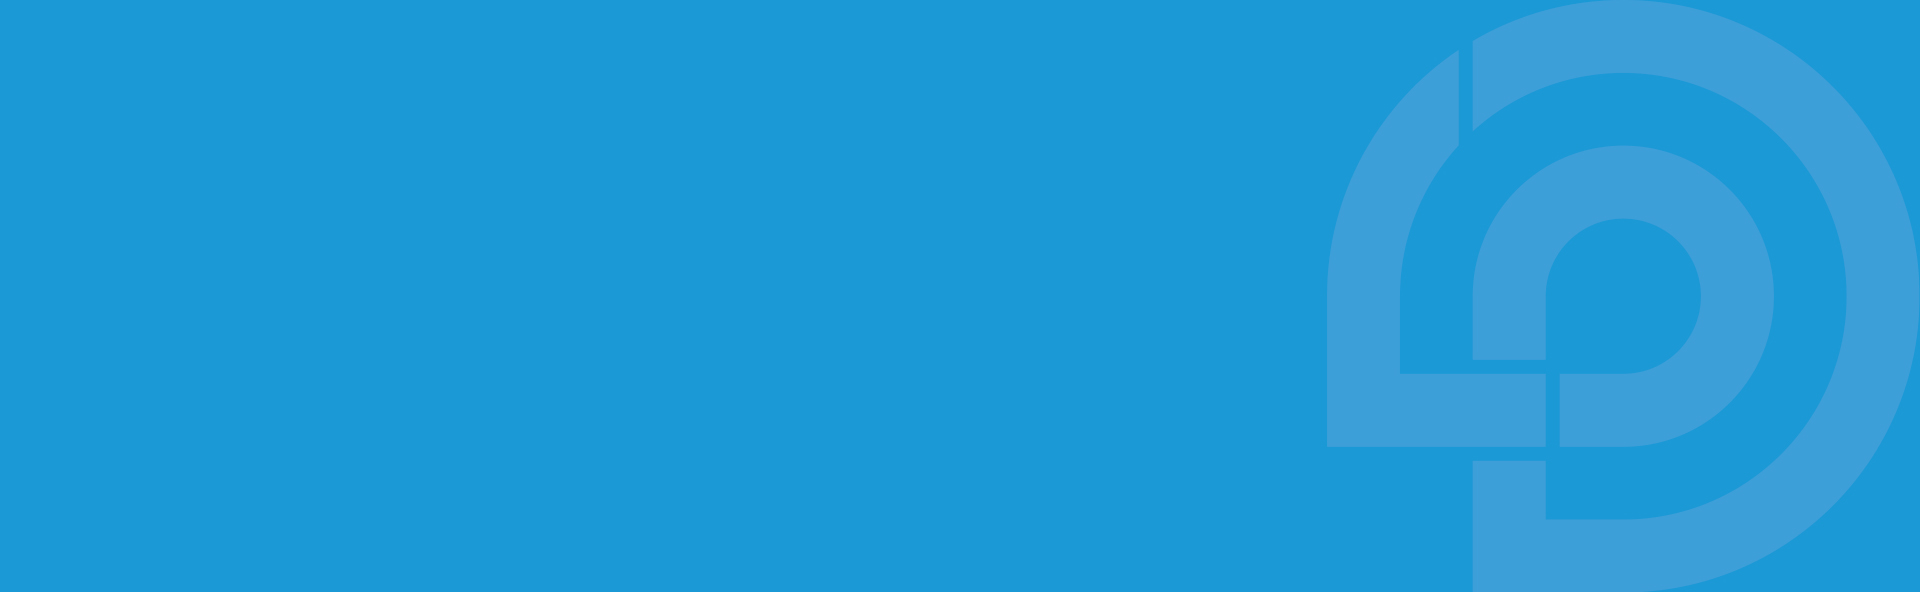 LeadPoint Digital Logo Watermarked Blue Background